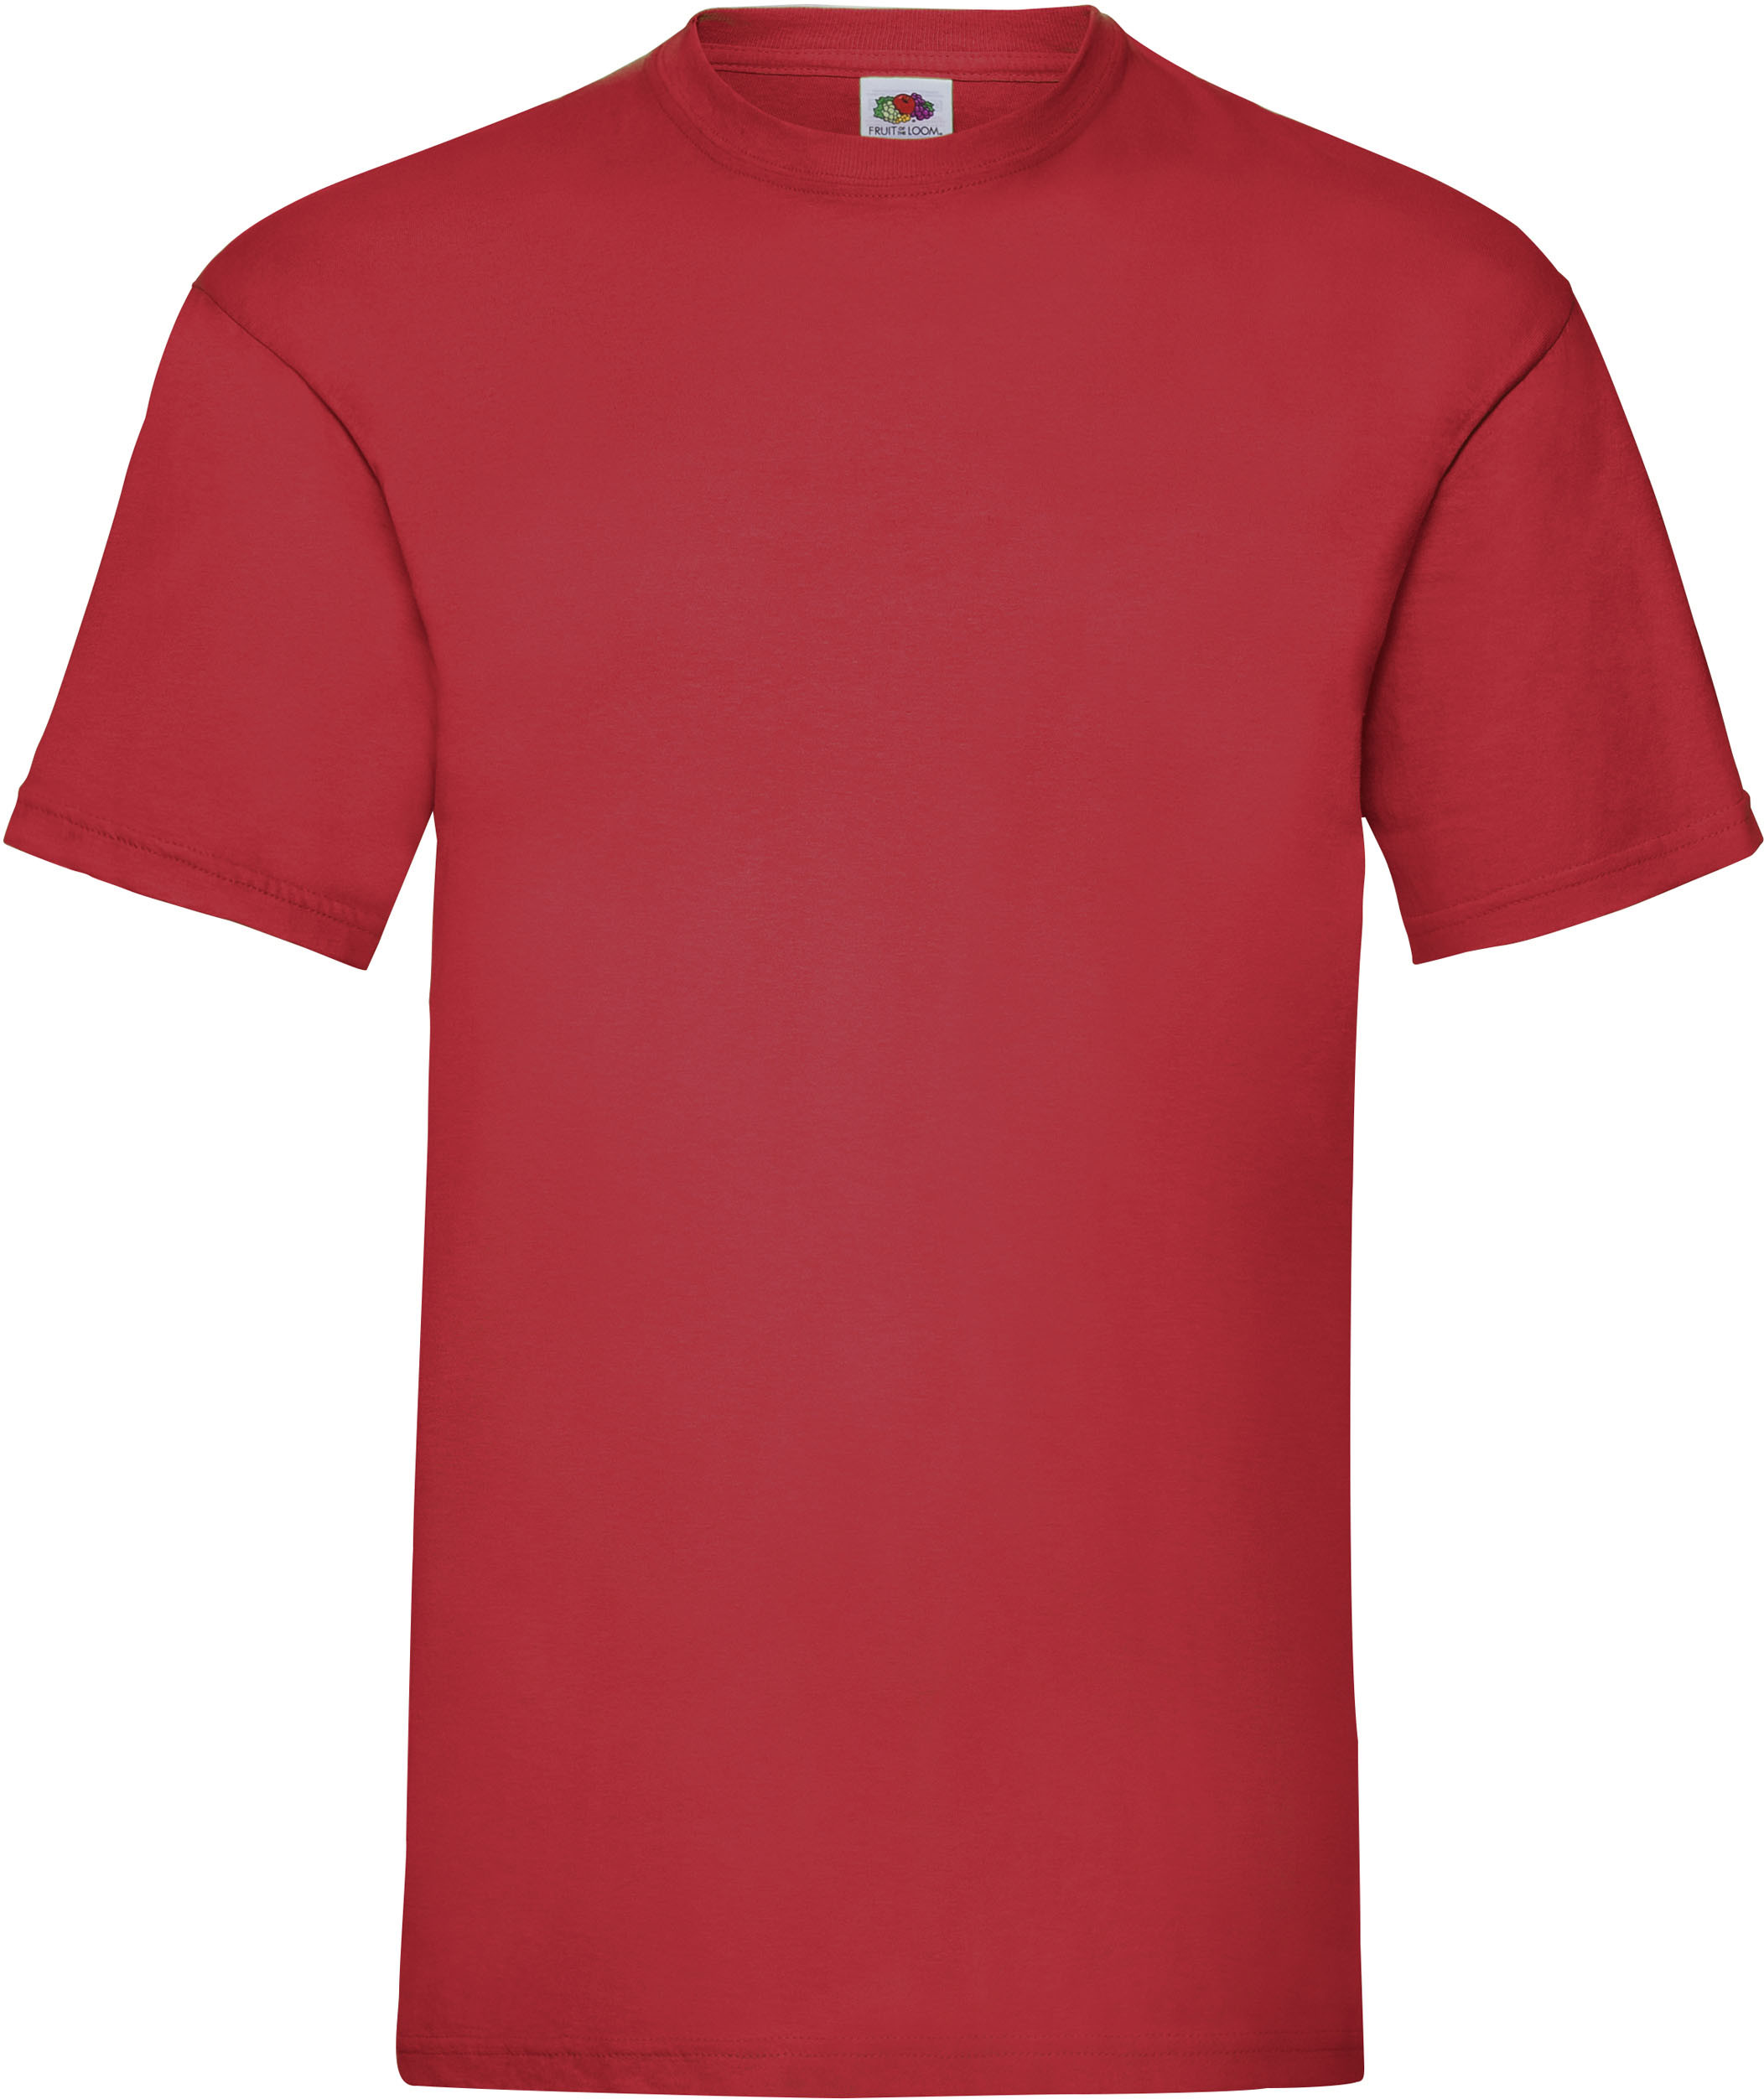 camiseta_personalizada_sc221_rojo